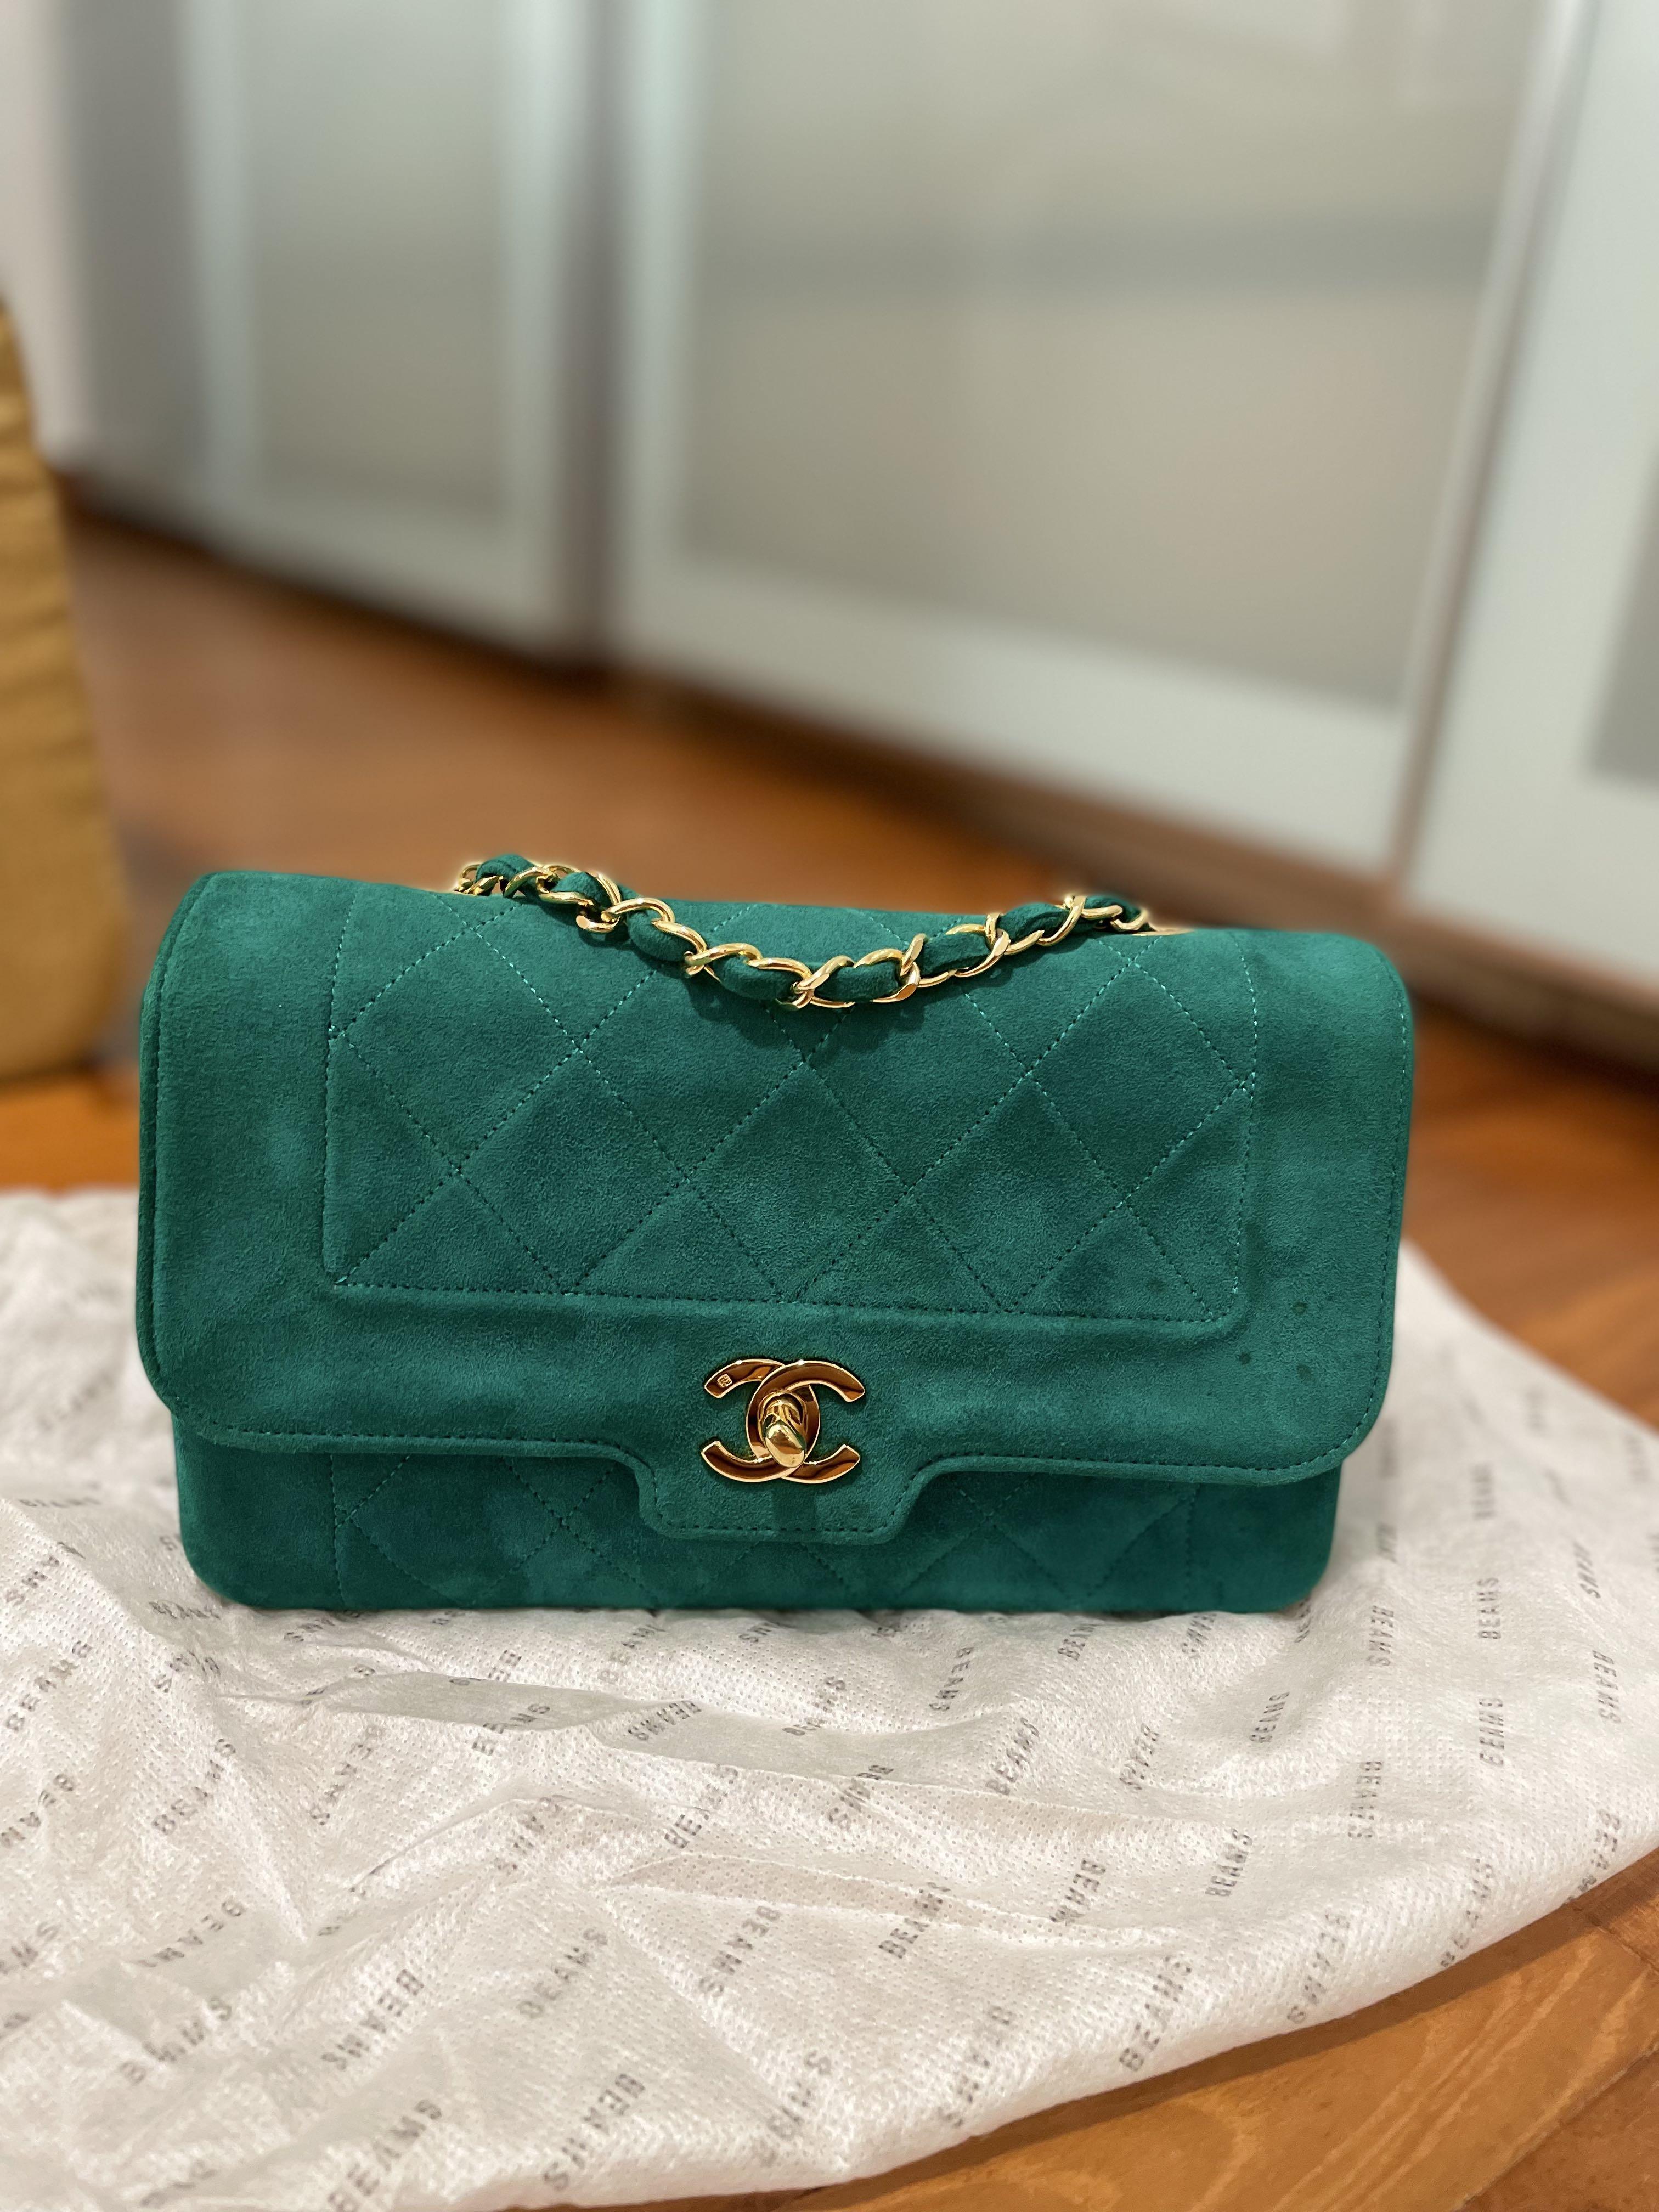 Chanel vintage velvet/suede mini flap in emerald green